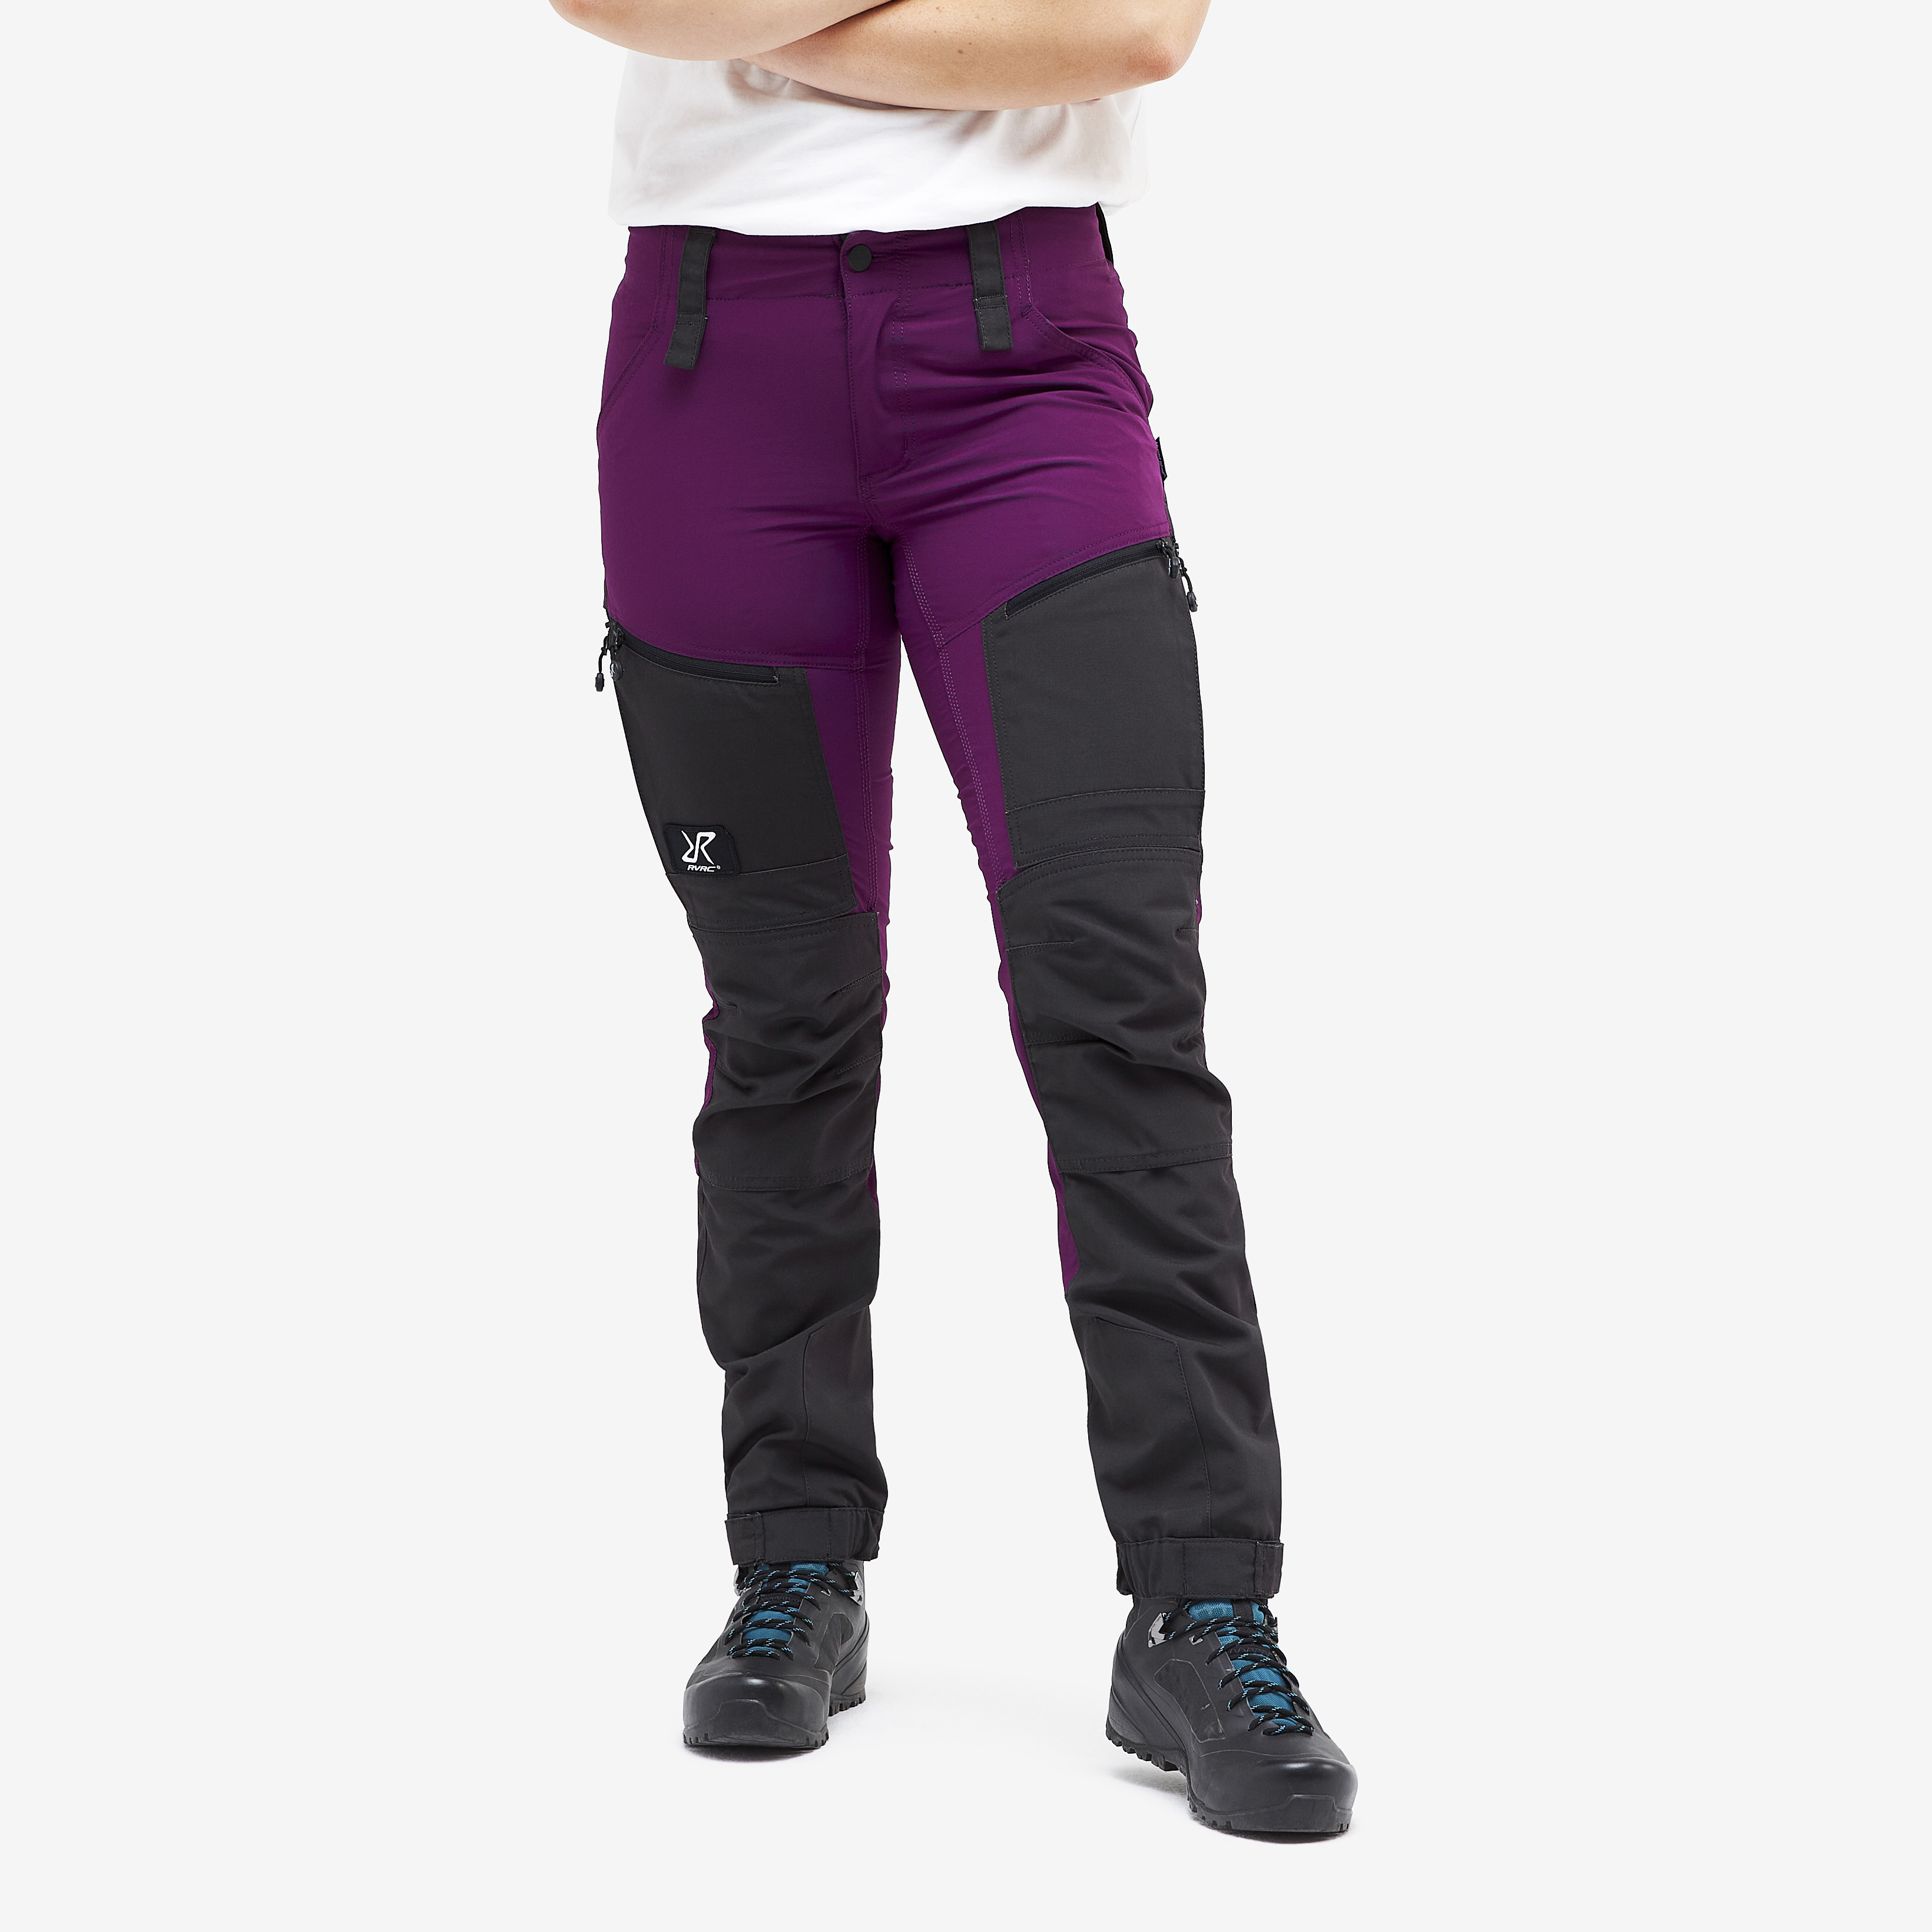 RVRC GP Pro Short hiking trousers for women in purple